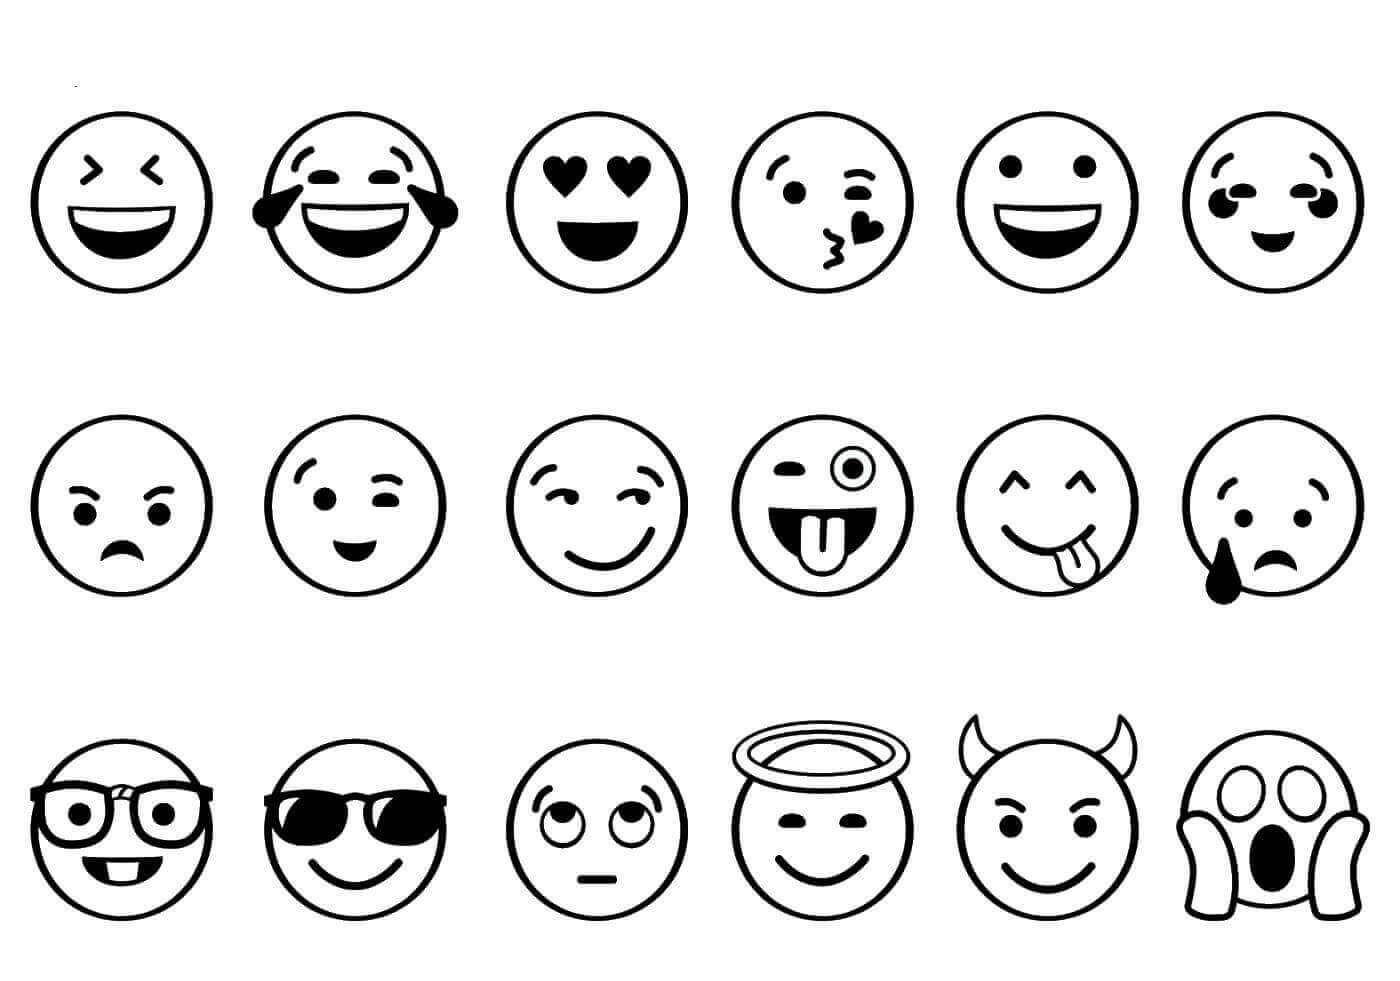 Free Emoji Coloring Pages
 Free Printable Emoji Coloring Pages